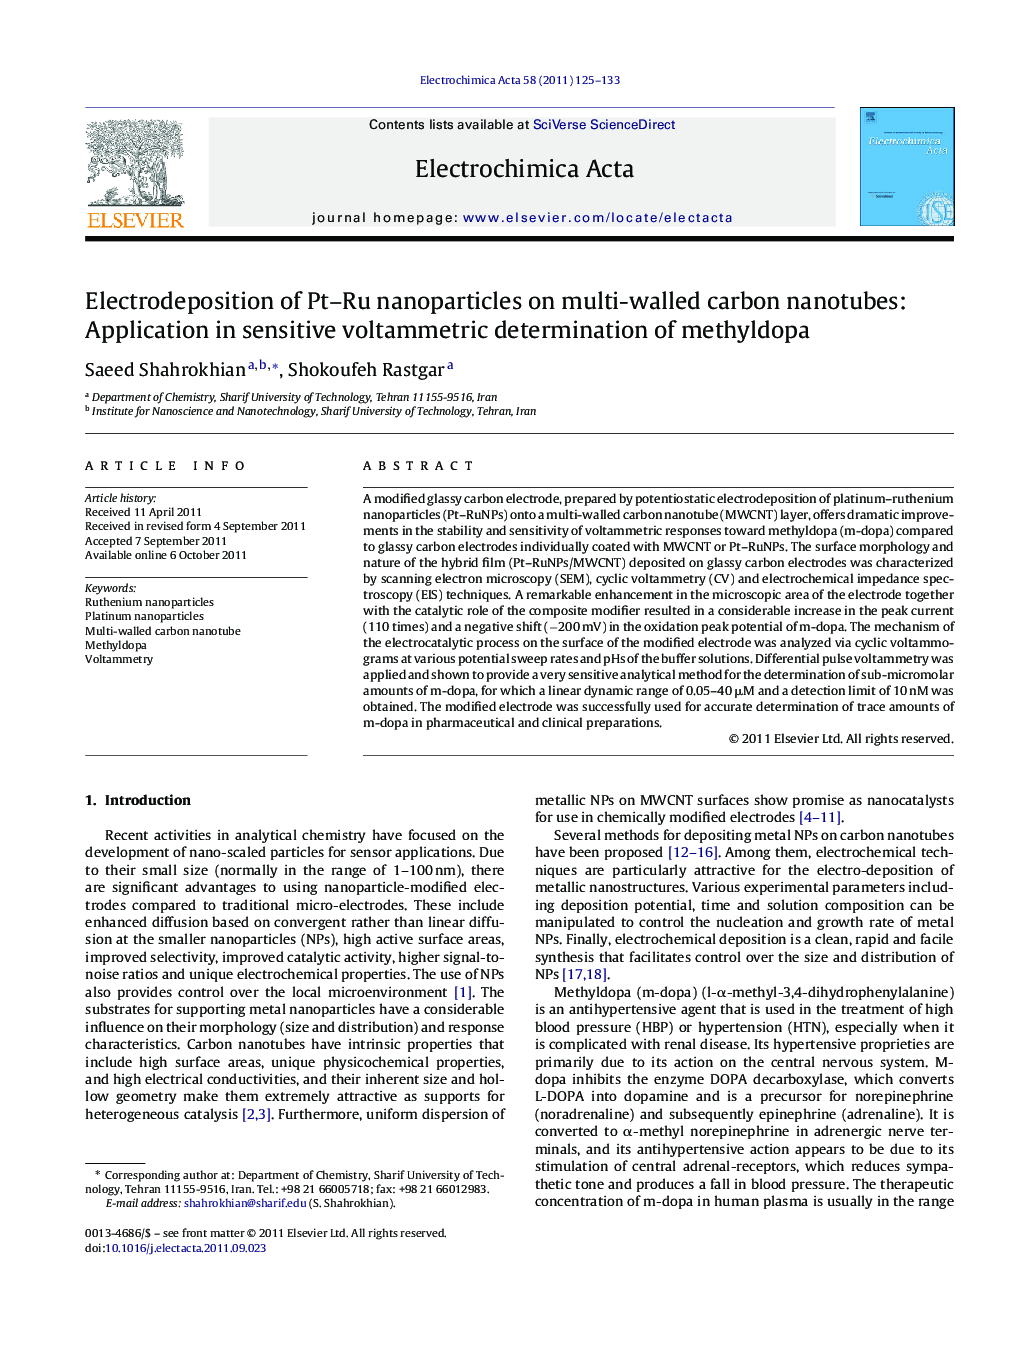 Electrodeposition of Pt–Ru nanoparticles on multi-walled carbon nanotubes: Application in sensitive voltammetric determination of methyldopa